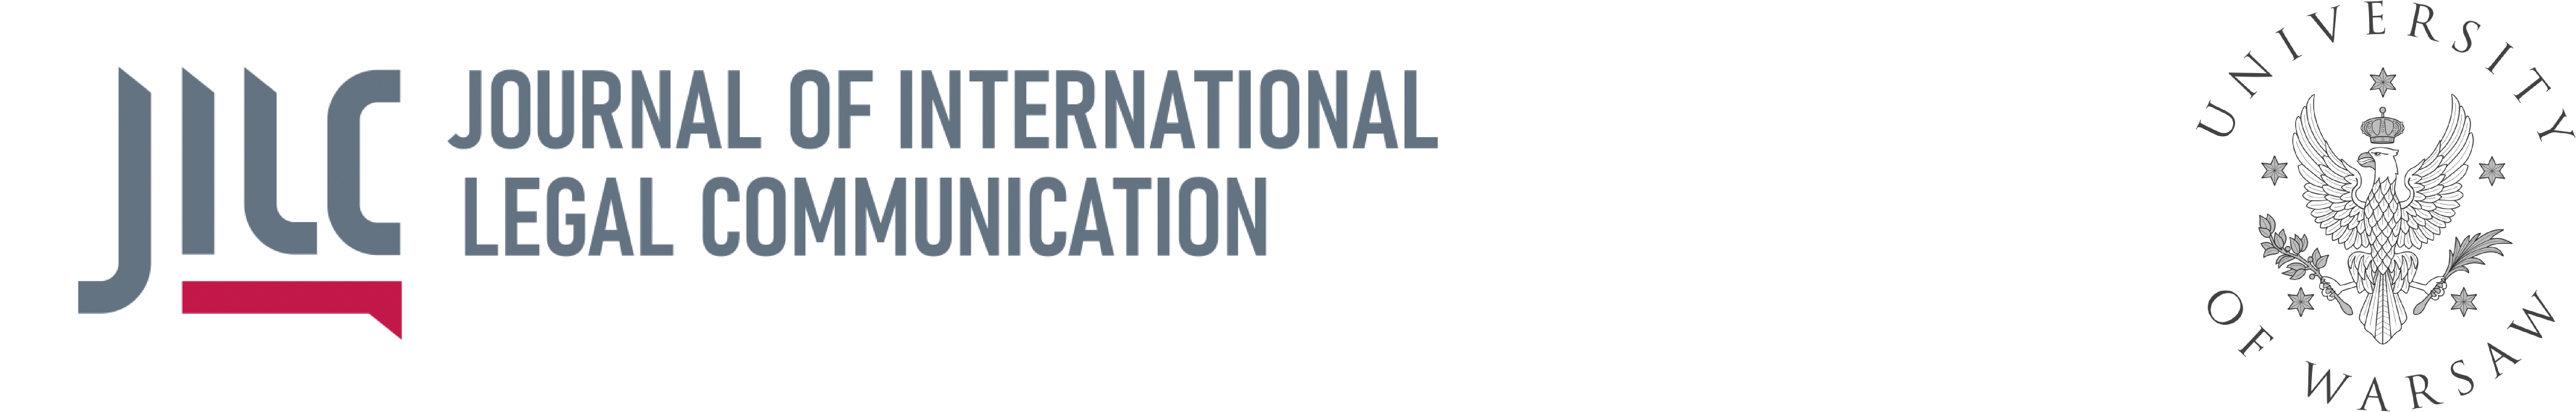 Journal of International Legal Communication Logo